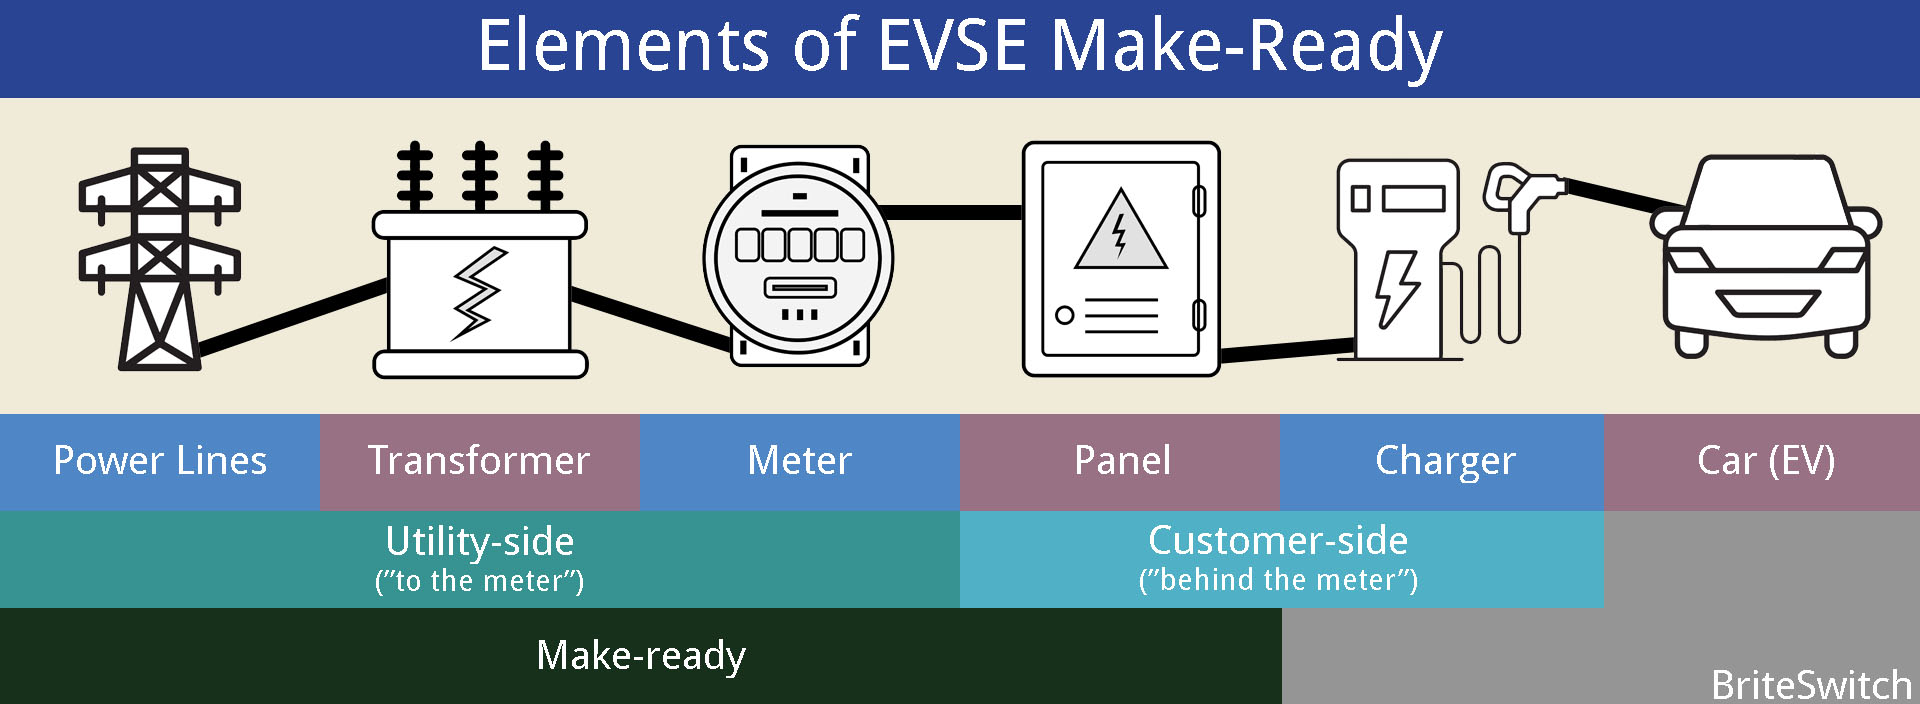 elements of EVSE make-ready rebates